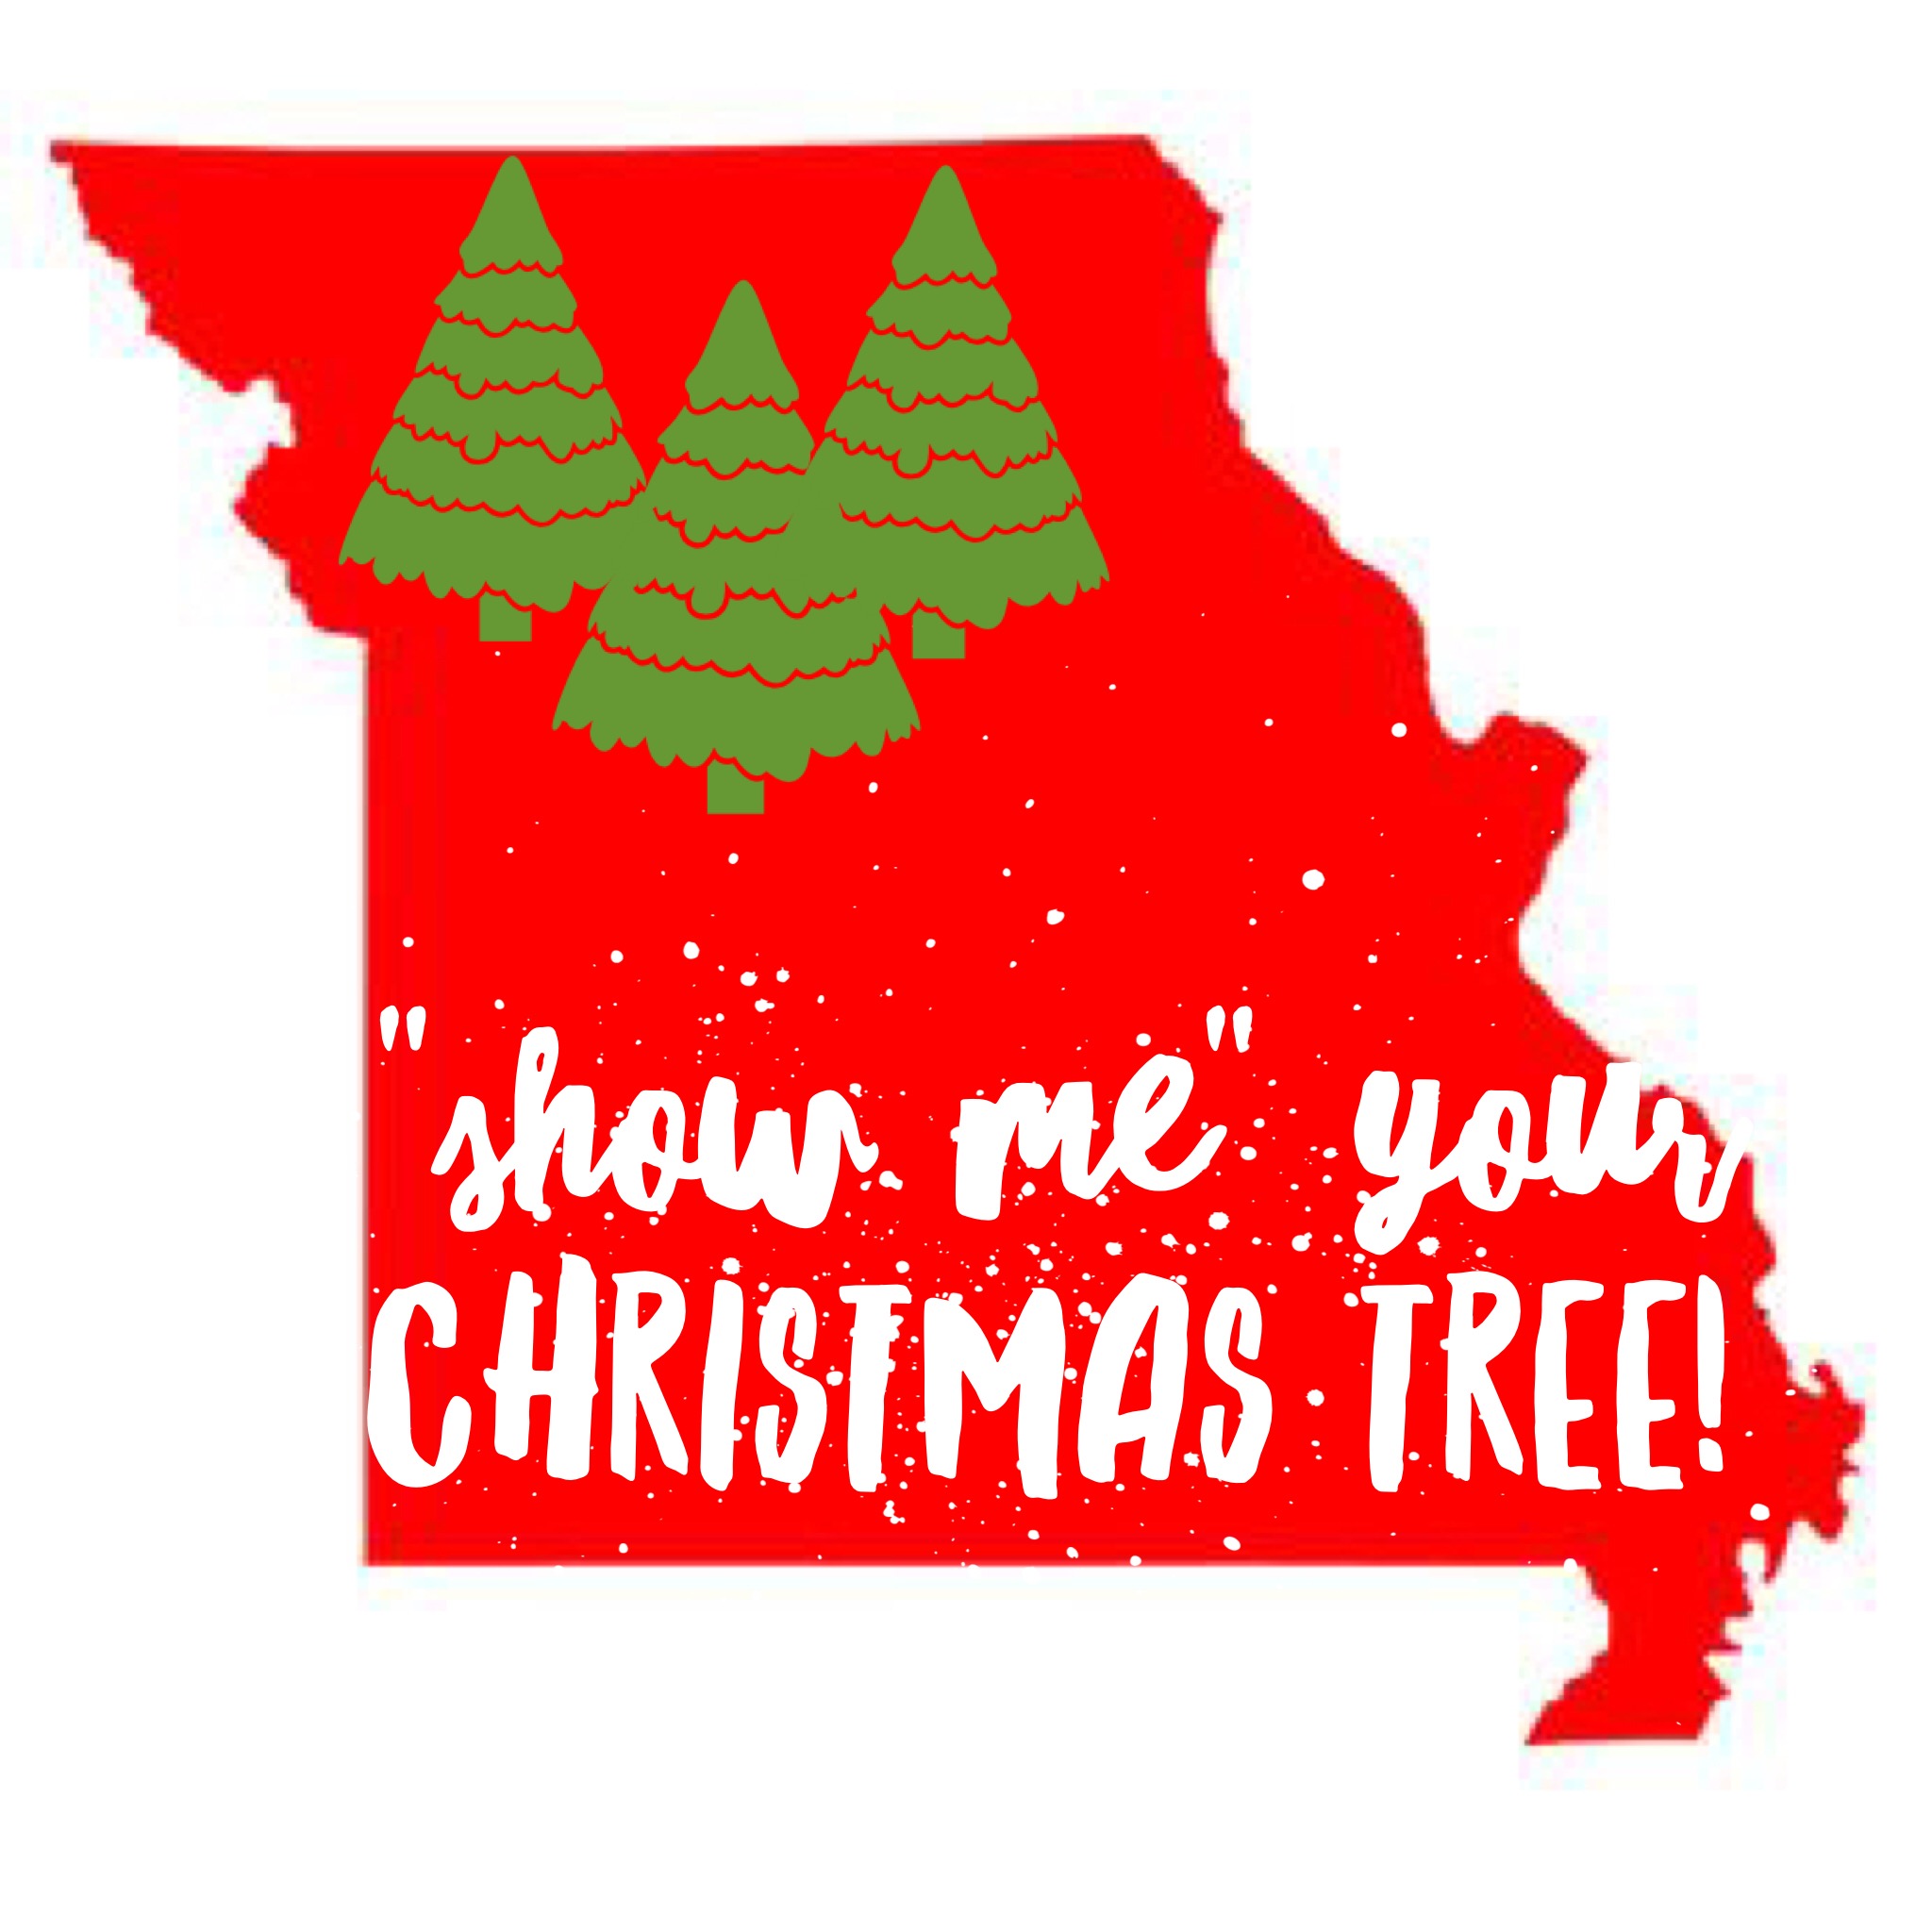 show me christmas trees